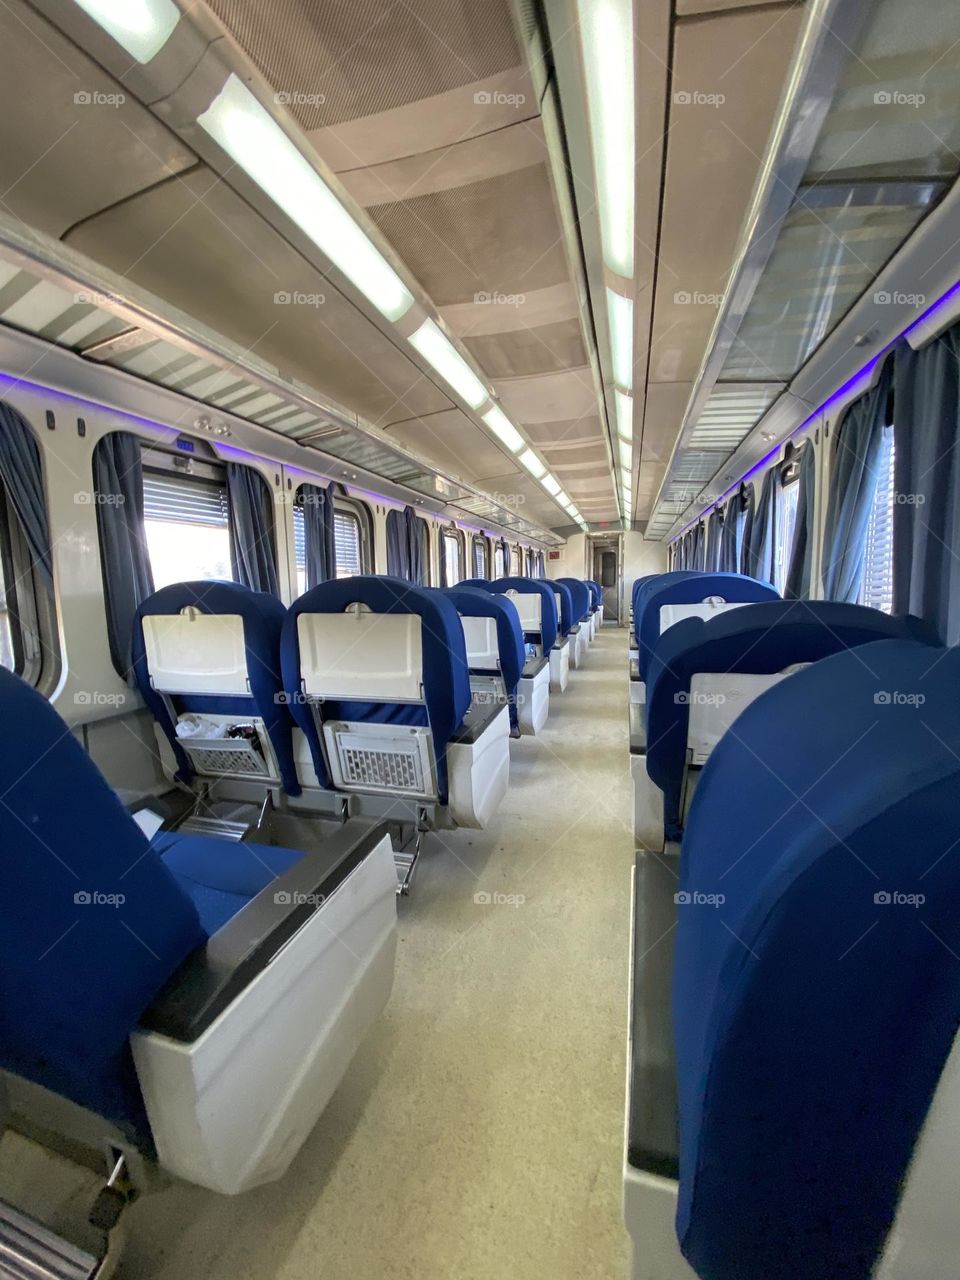 Travel by train is amazing when it is empty 